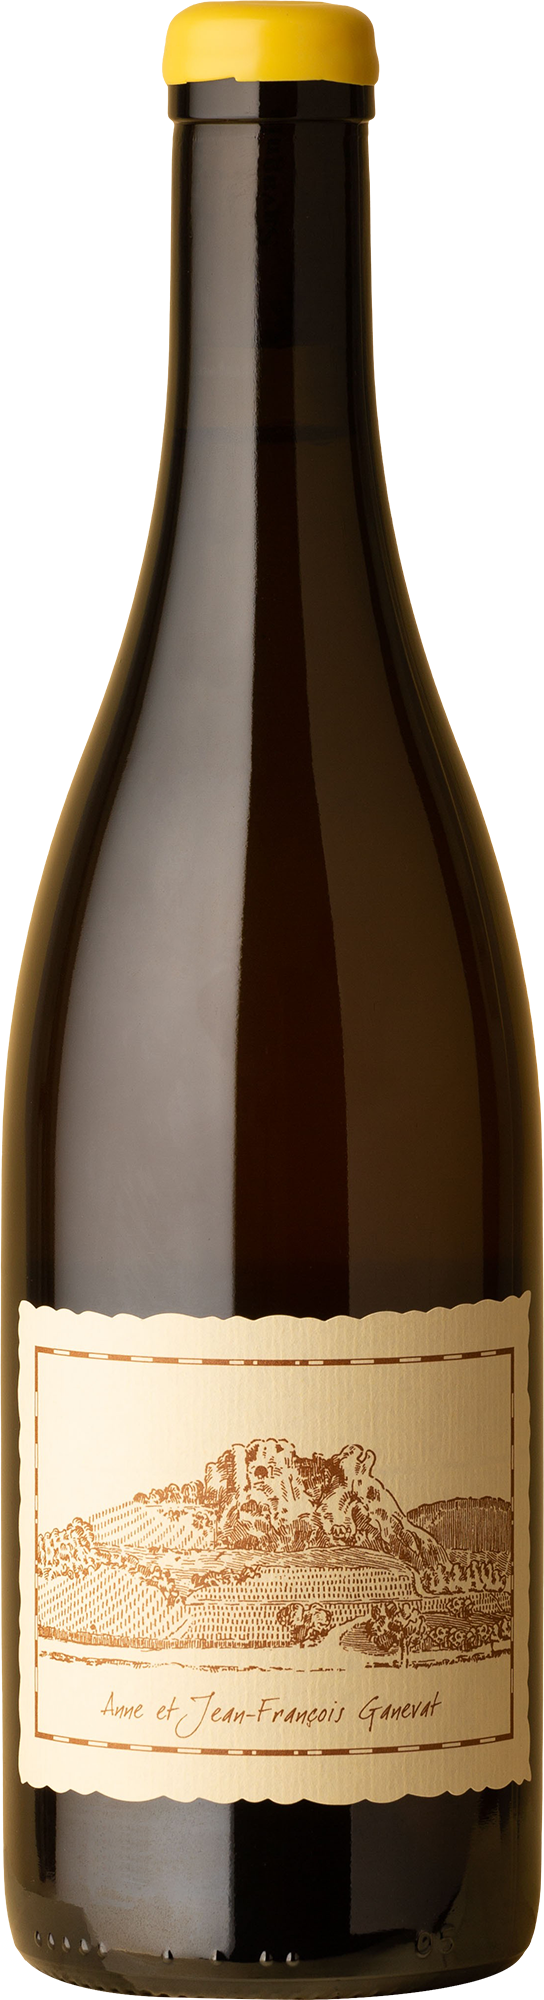 Anne & Jean-François Ganevat - Cotes du Jura Montferrand Savagnin 2019 White Wine